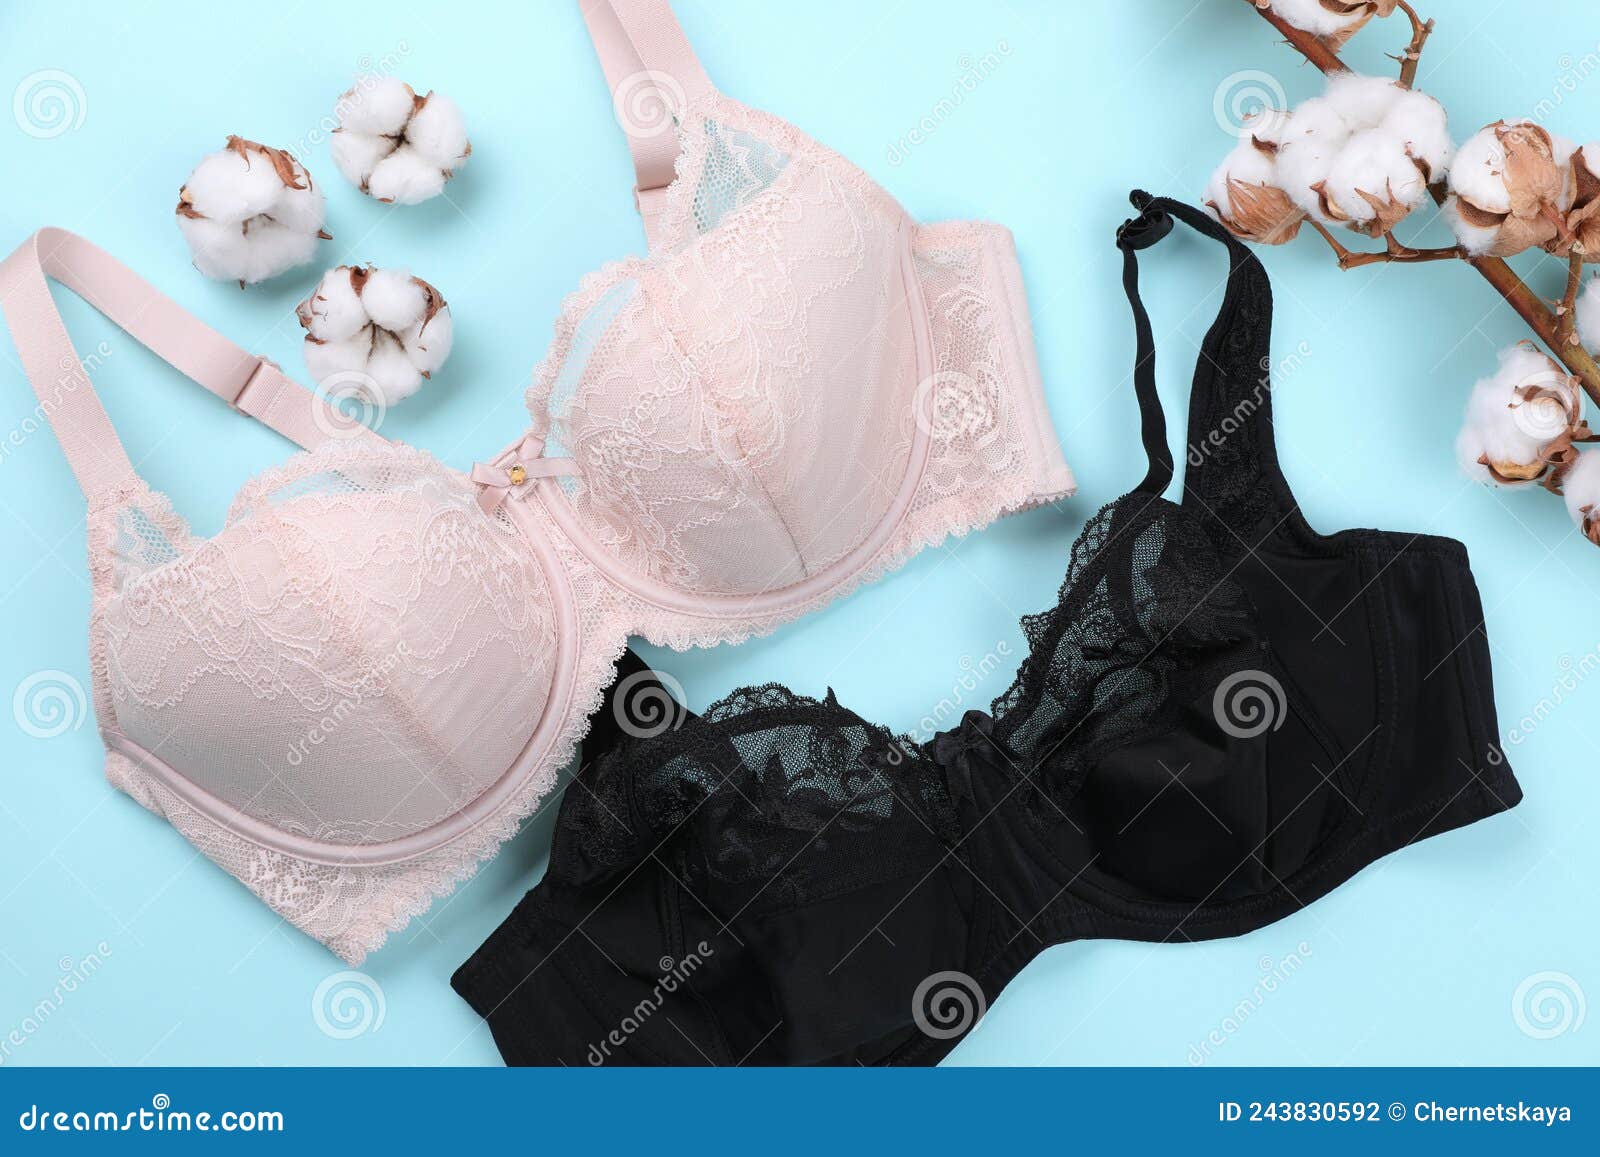 Elegant Plus Size Women`s Bras and Fluffy Cotton Flowers on Light Blue  Background, Flat Lay Stock Photo - Image of black, elegant: 243830592